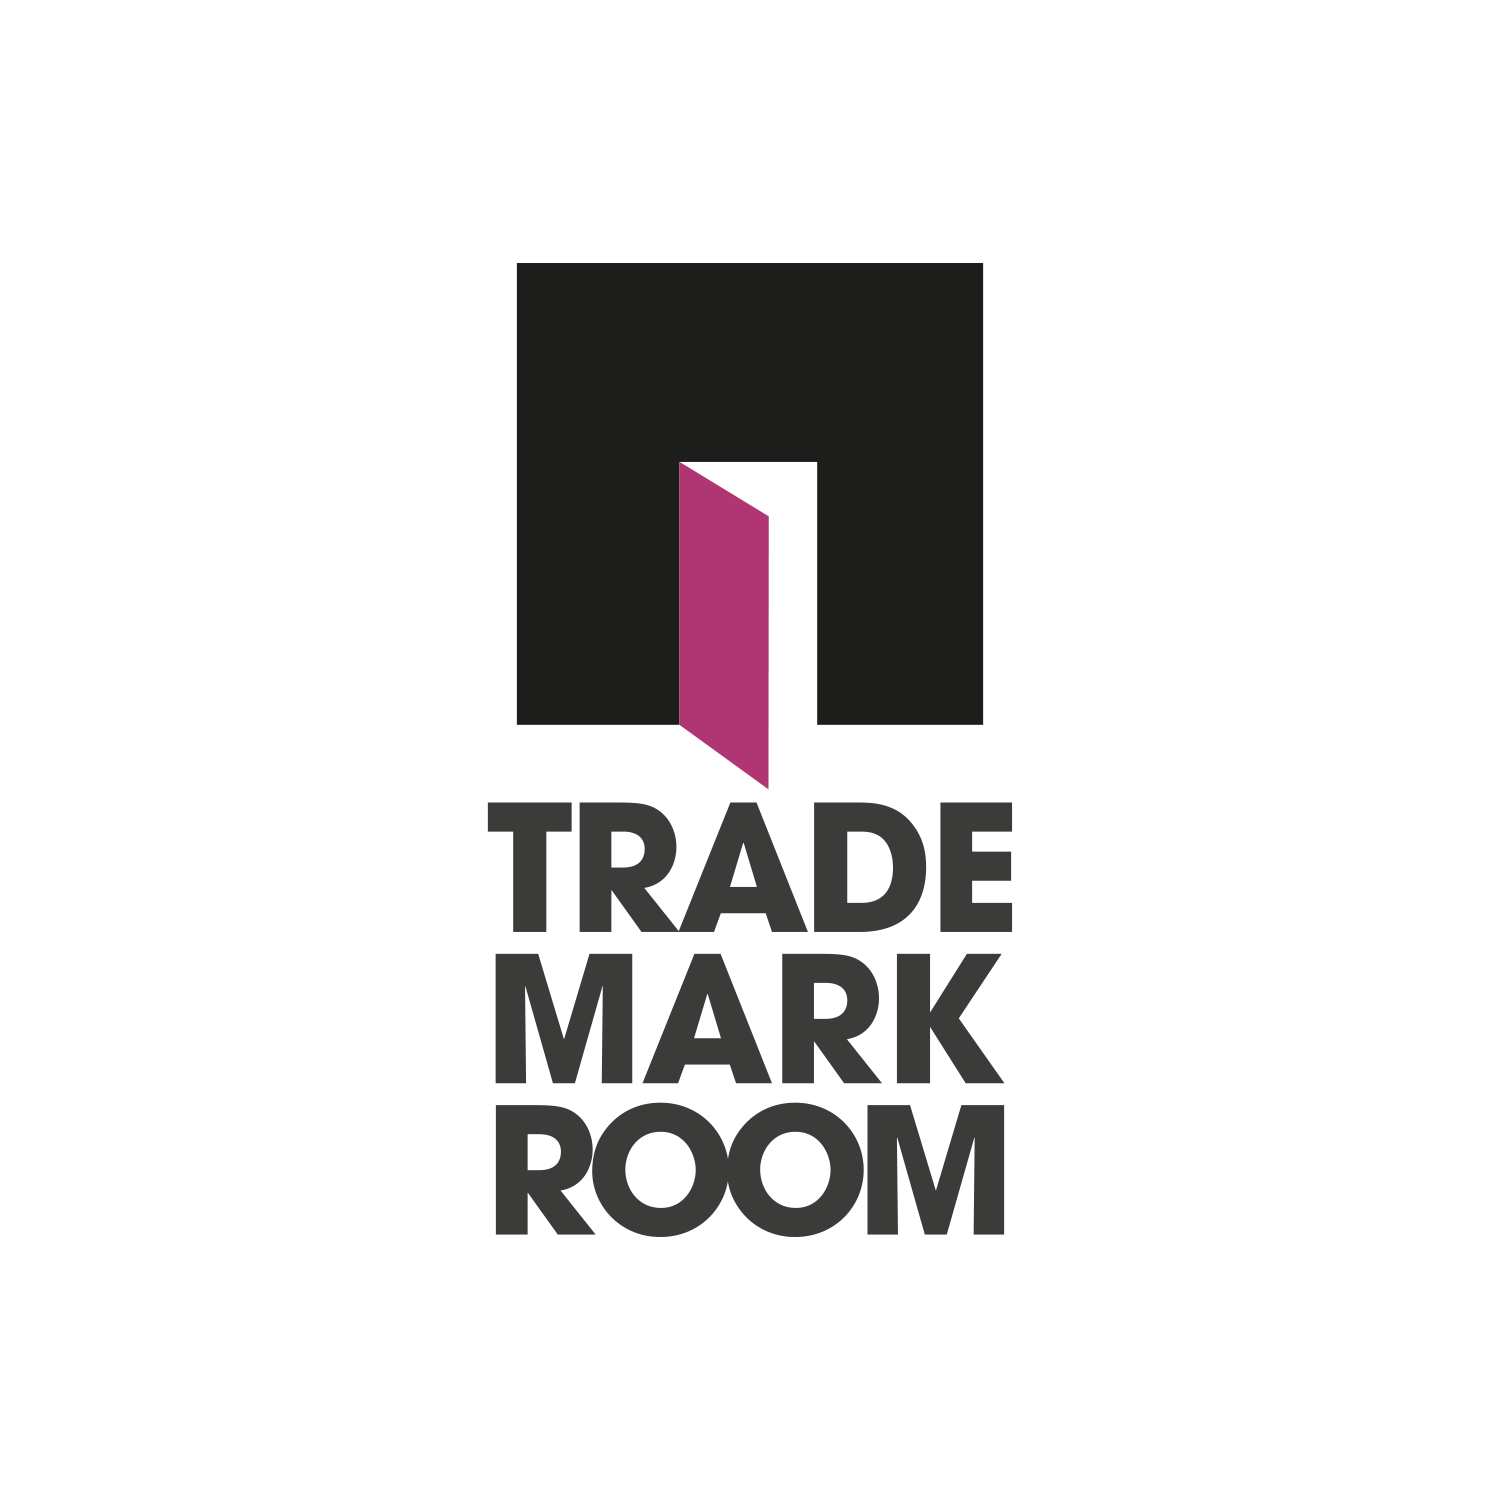 Trade Mark Room_01